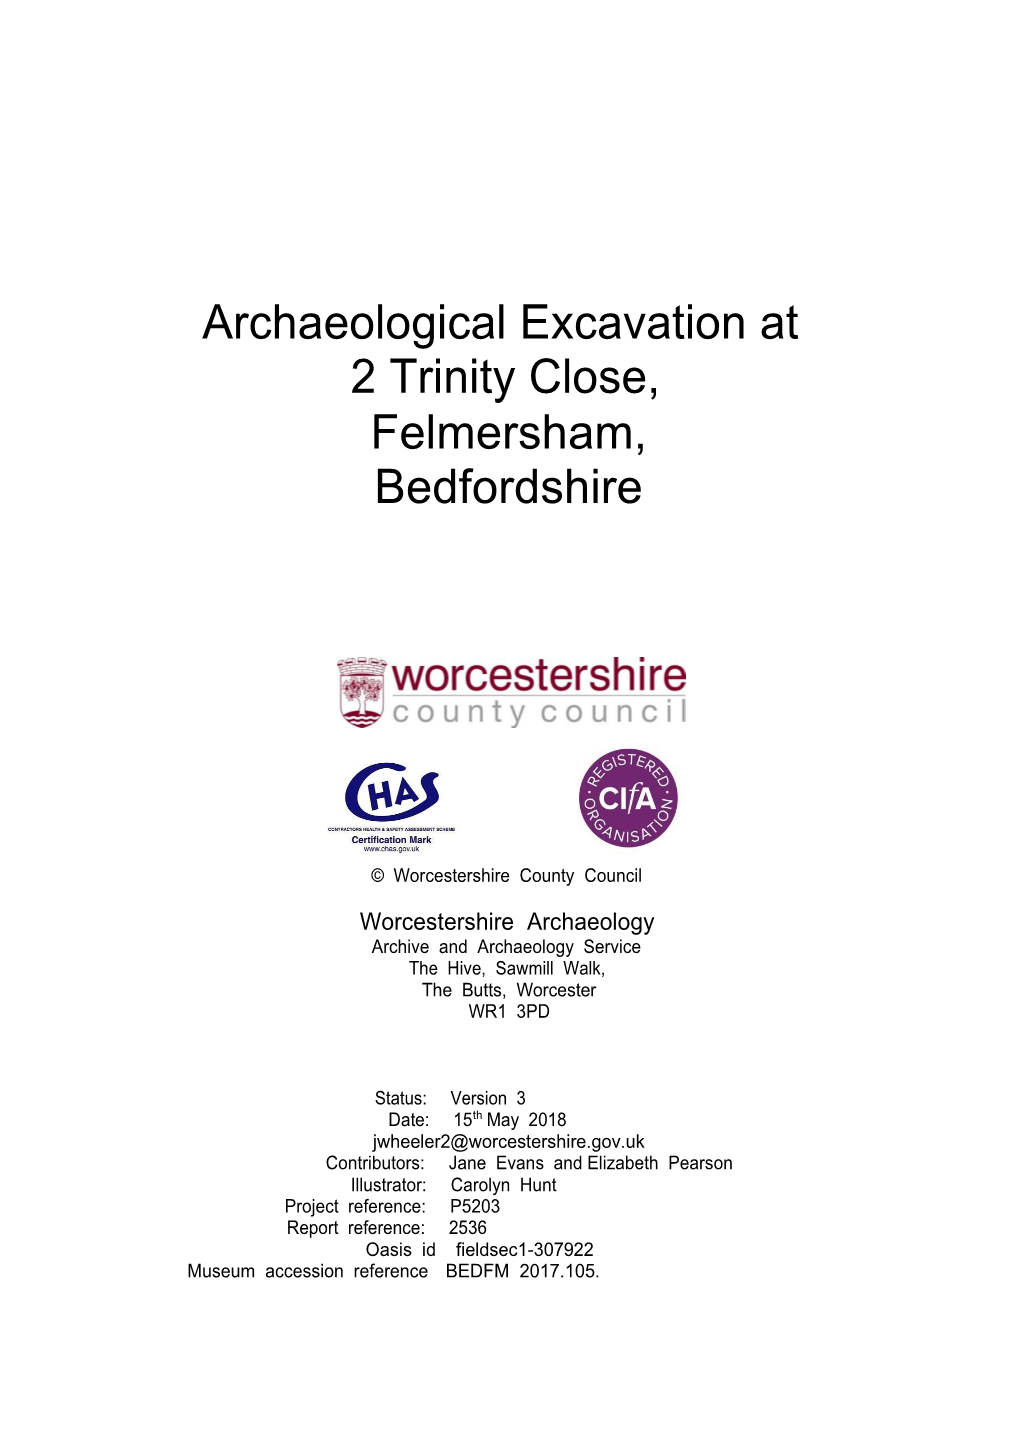 Archaeological Excavation at 2 Trinity Close, Felmersham, Bedfordshire